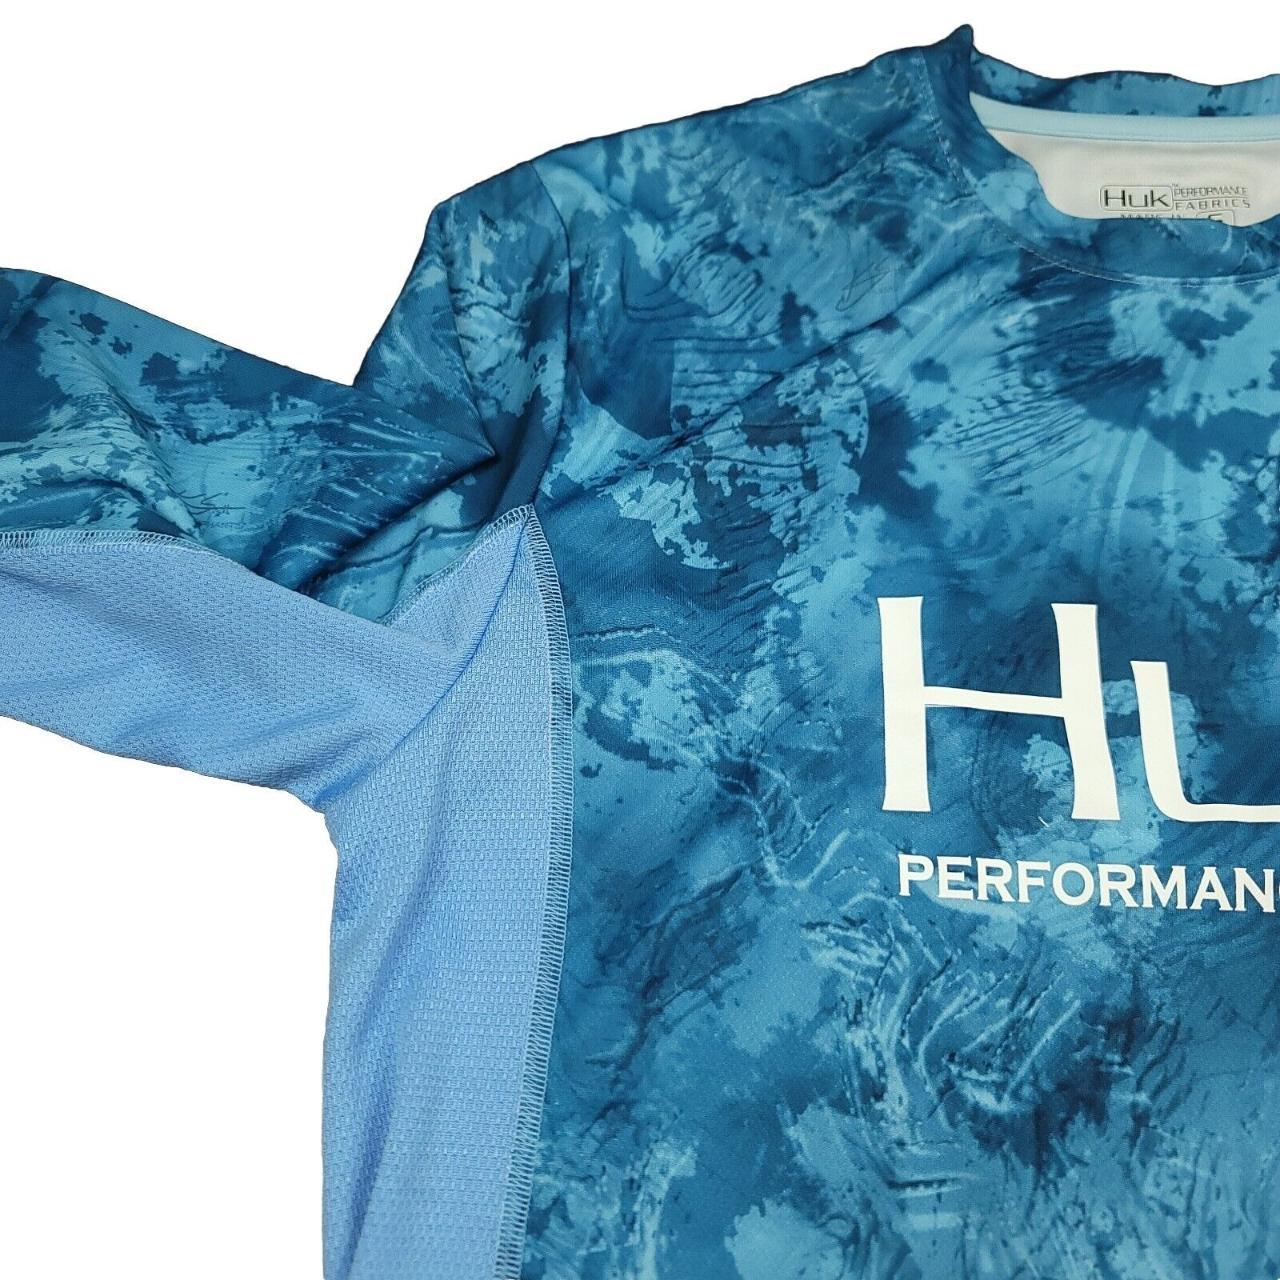 Huk Performance Fishing Long Sleeve T-Shirt Size XL - Depop